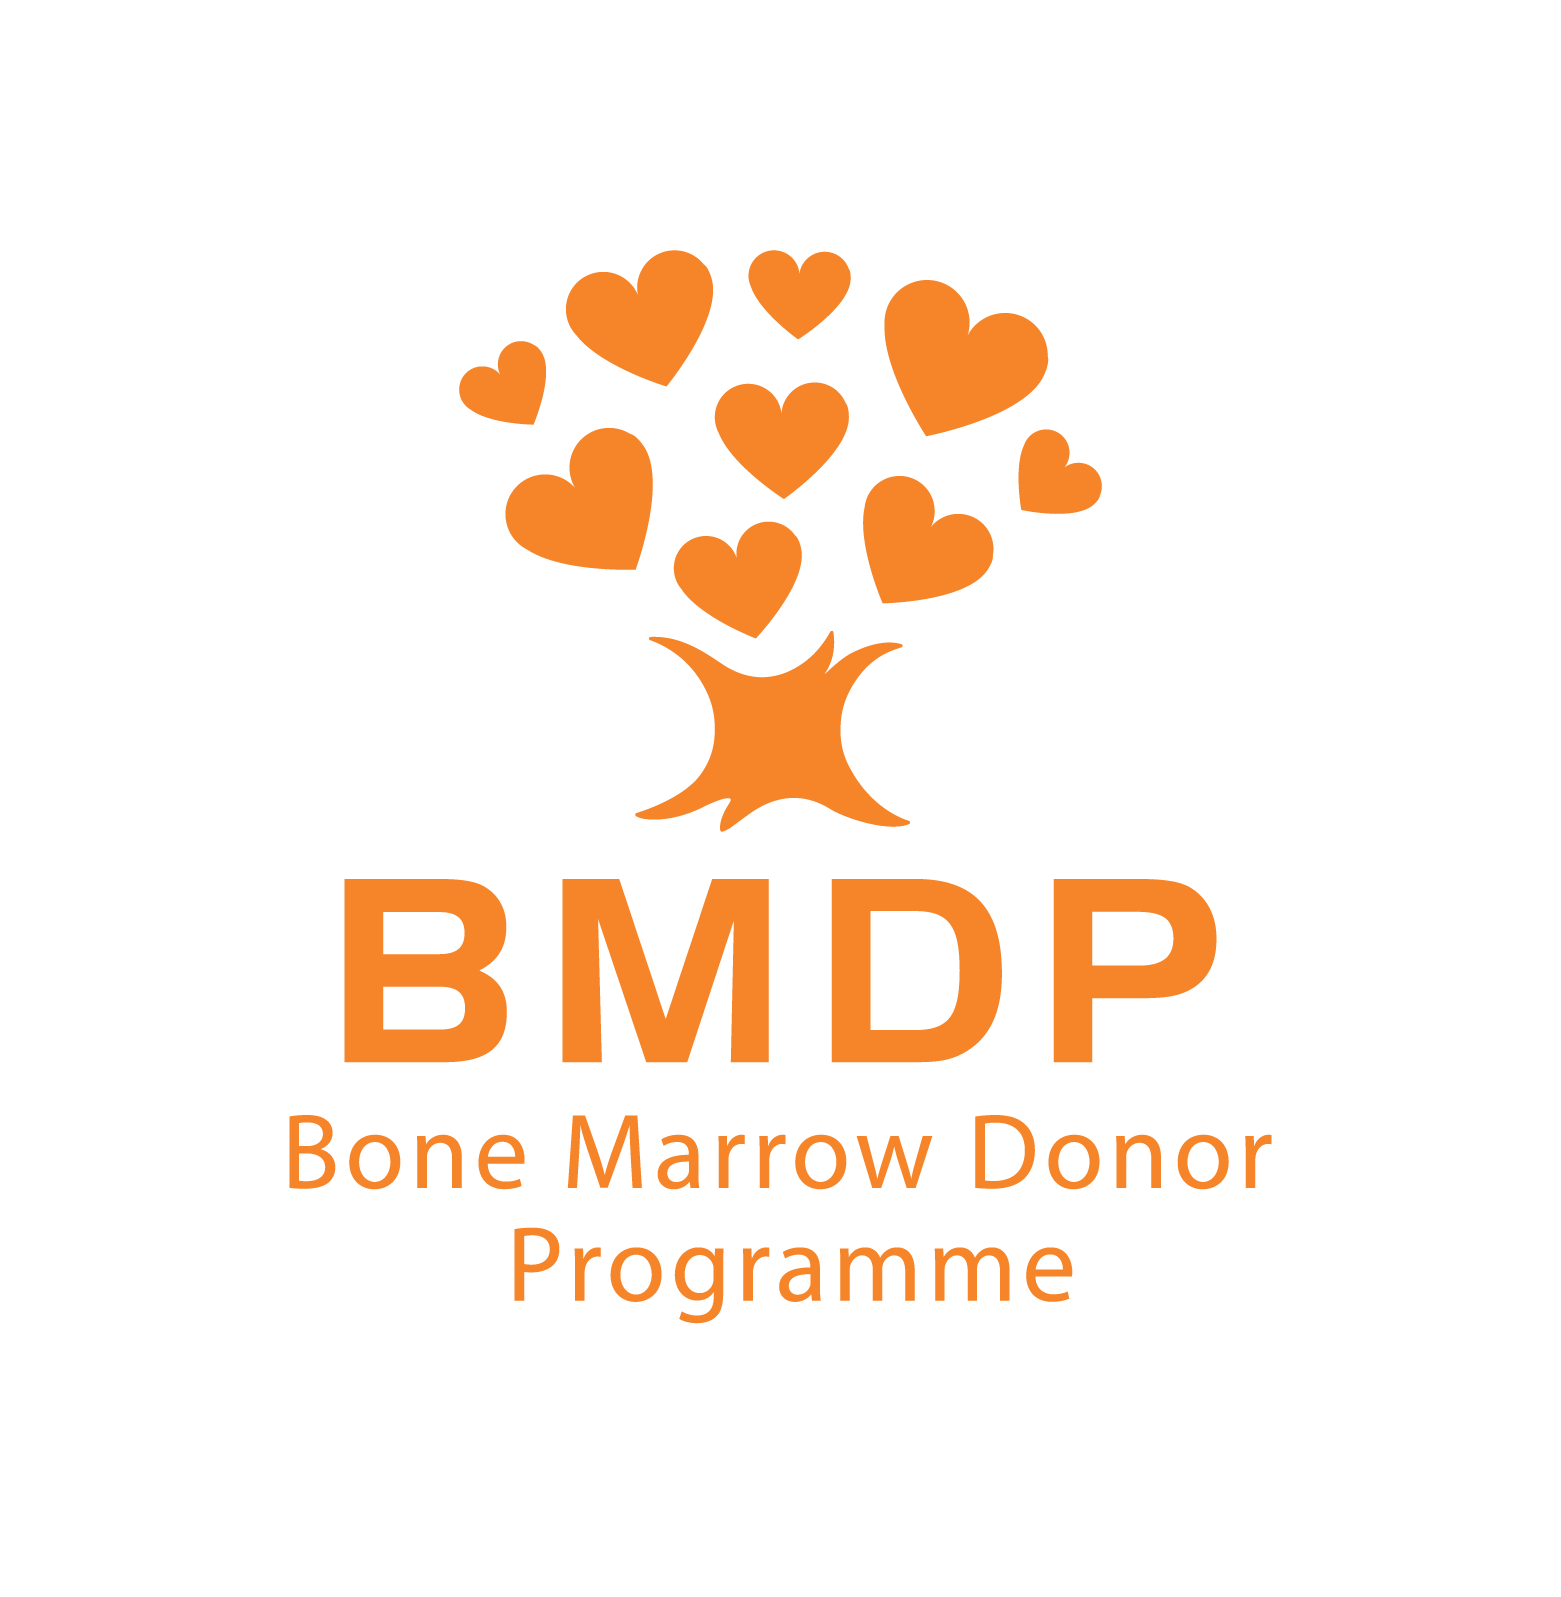 Bone Marrow Donor Programme, The